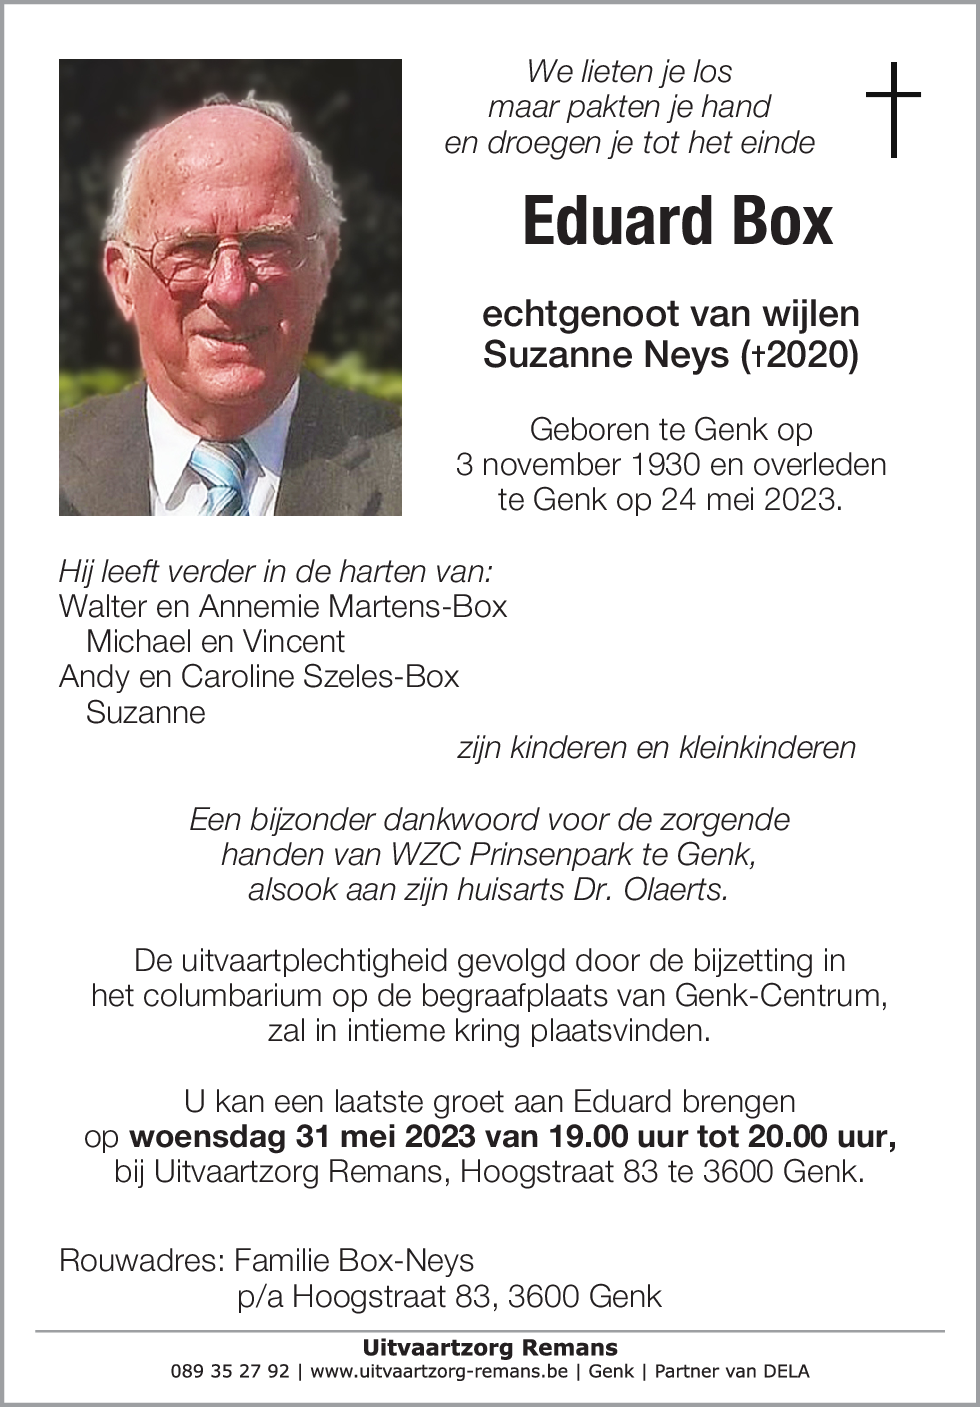 Eduard Box